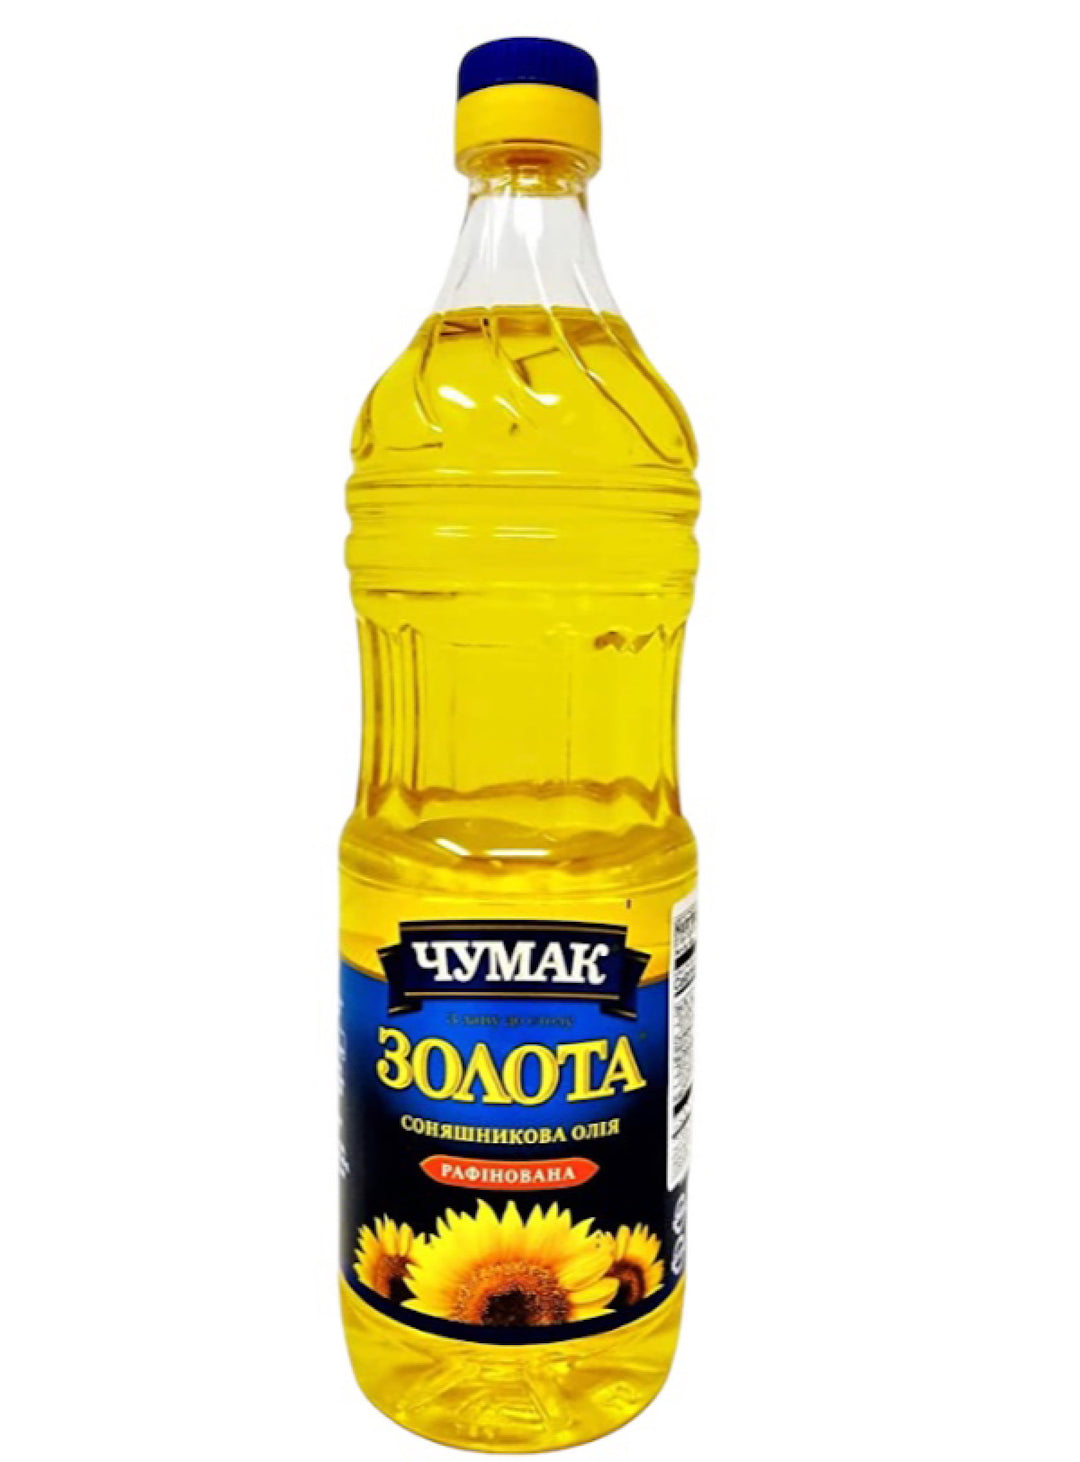 Sunflower Oil Refined - Chumak - .90 liters